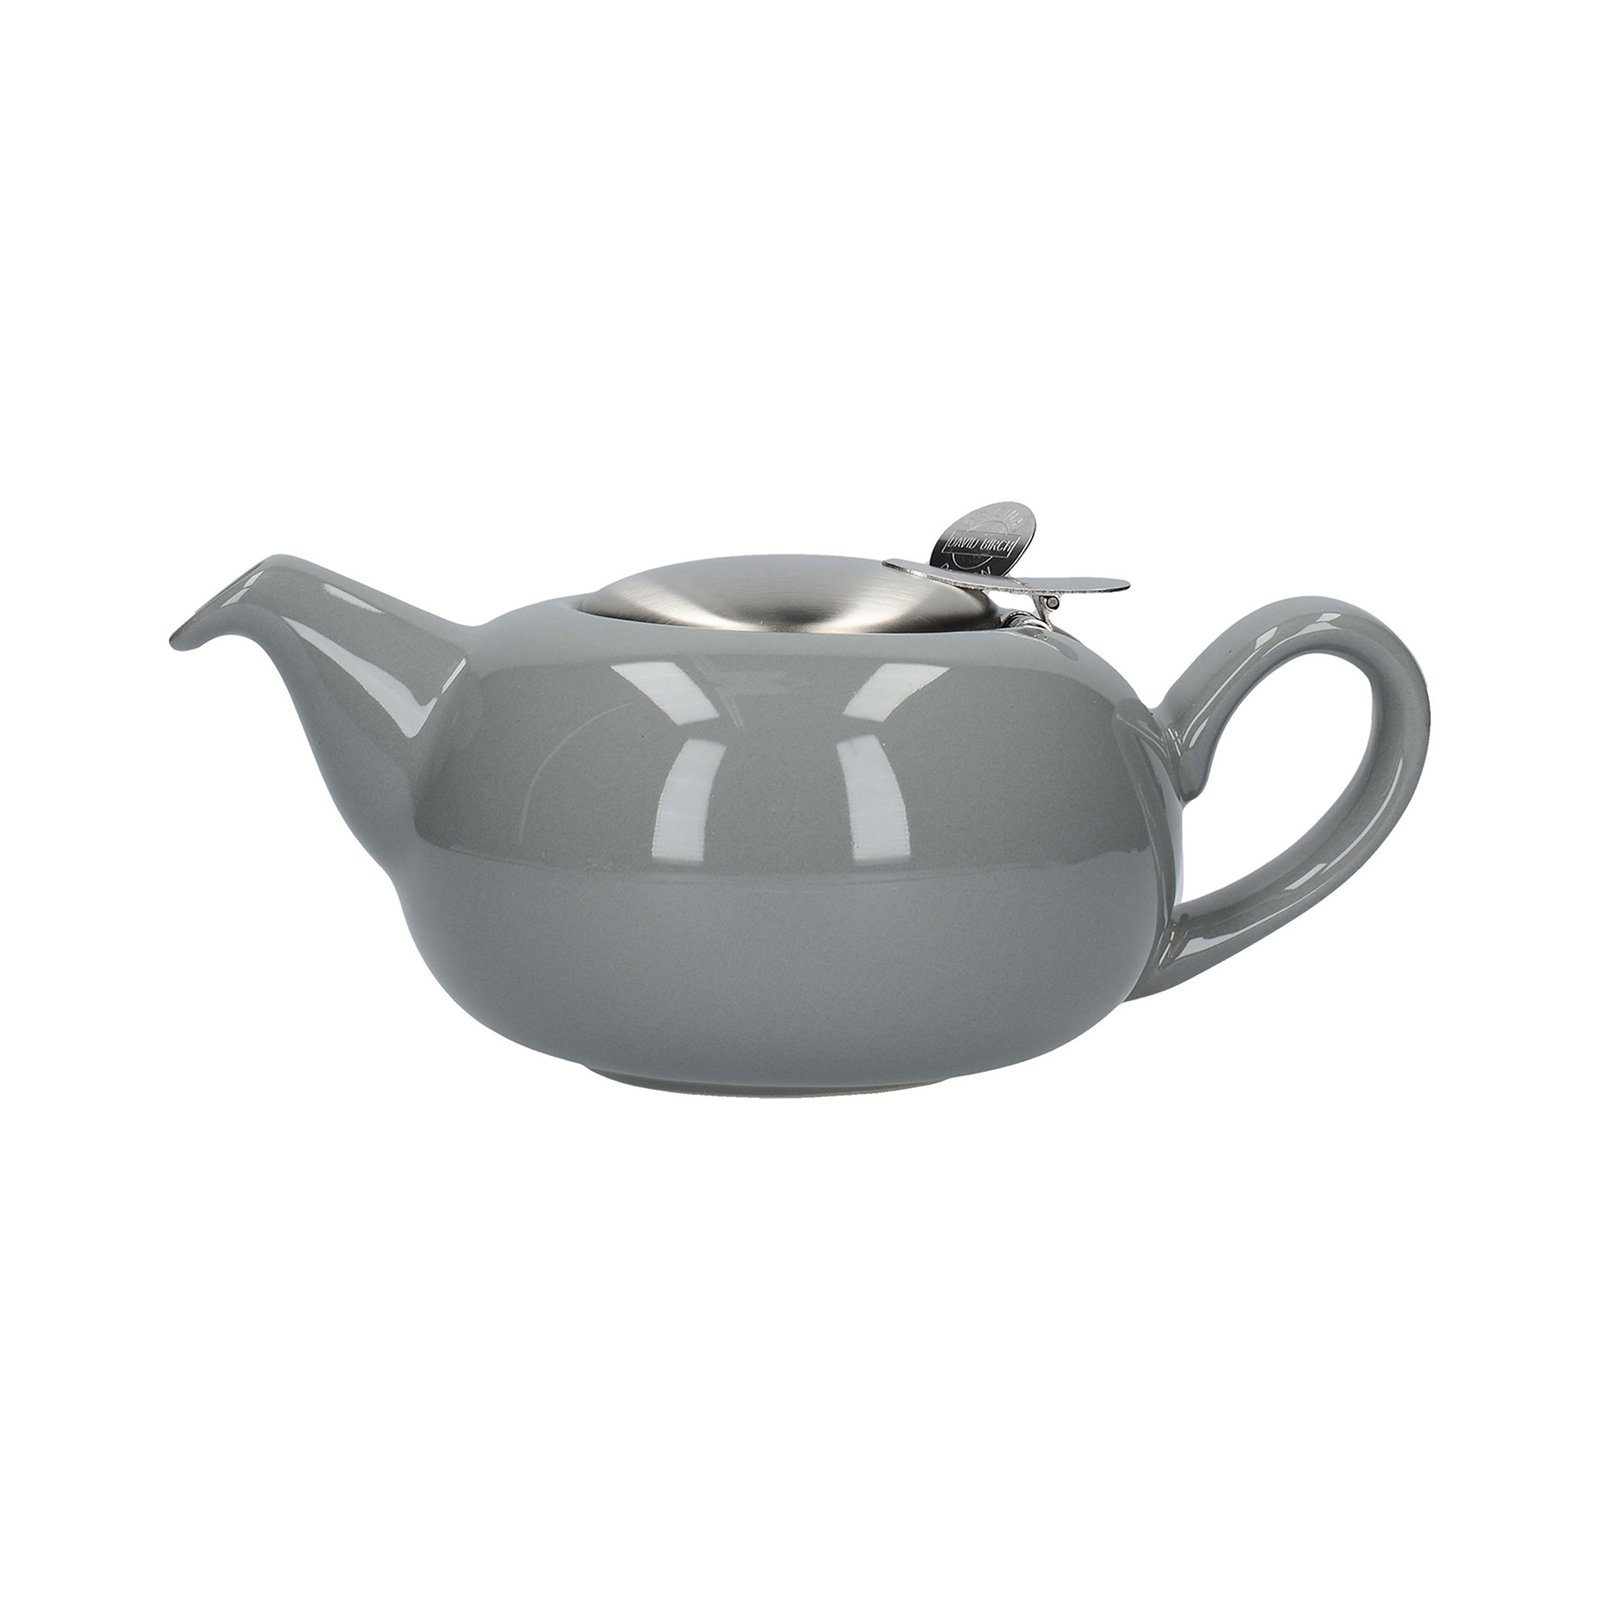 Neuetischkultur Teekanne Teekanne mit Sieb, 0.5 Hellgrau 500 Keramik, 2 Tassen ml, l